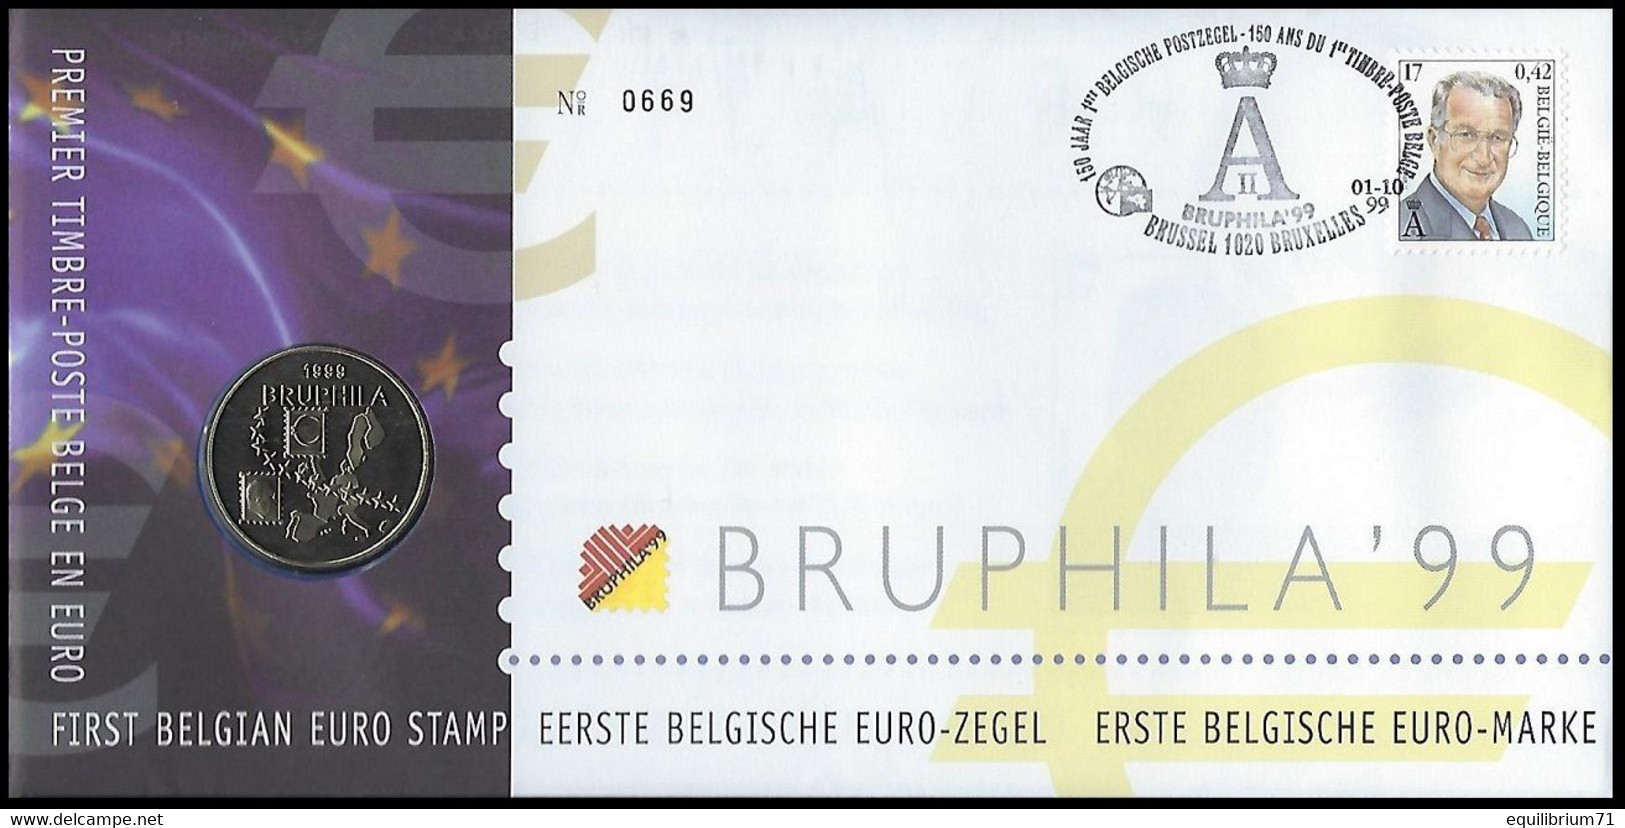 NUMISLETTER 2840° - Bruphila'99 -  SM Roi Albert II / ZM Koning Albert II / HM König Albert II - BELGIQUE / BELGIË - Numisletter